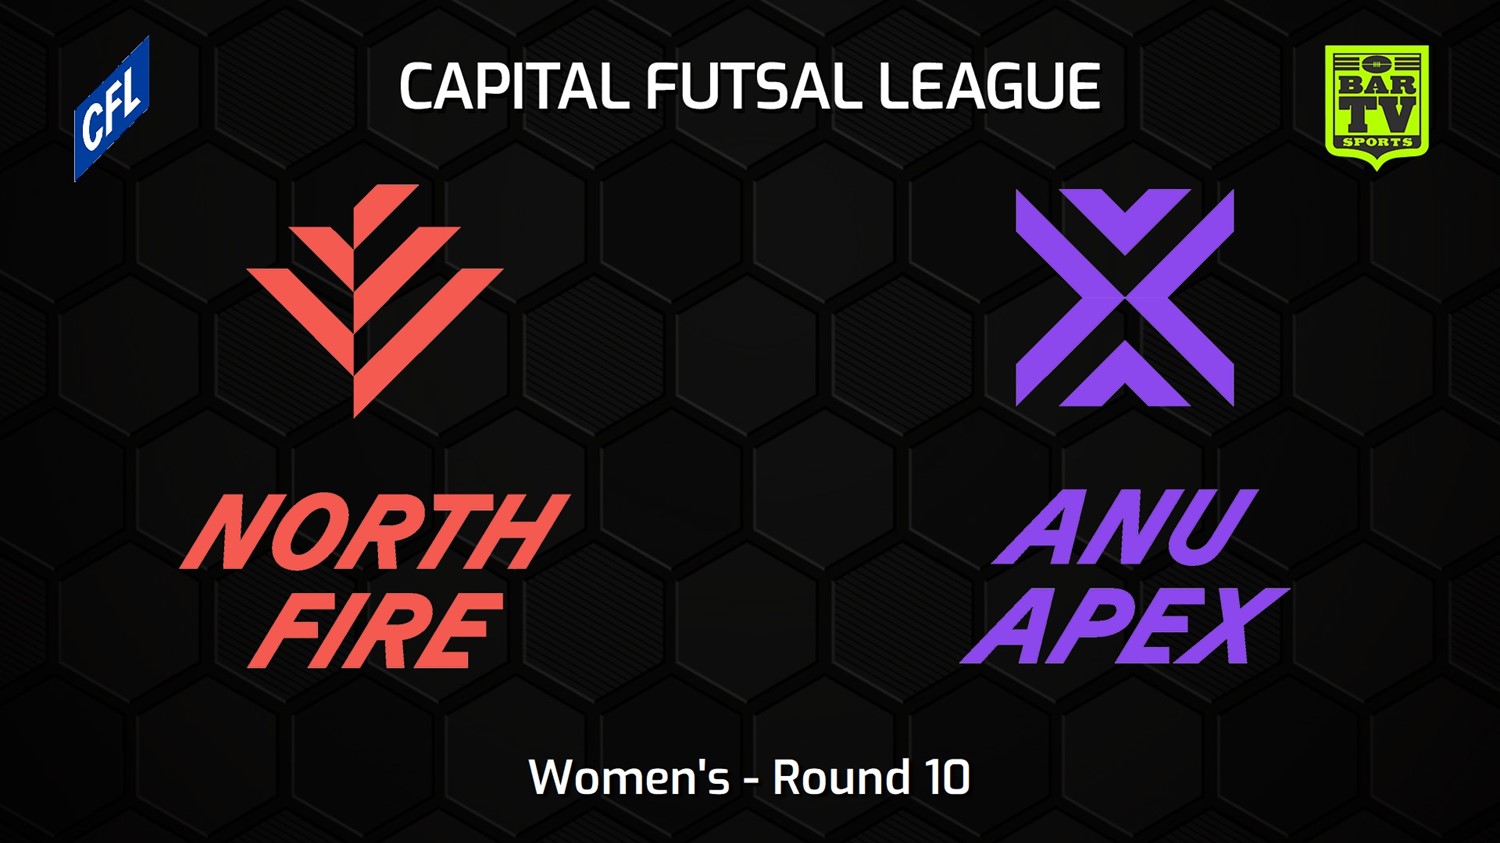 240128-Capital Football Futsal Round 10 - Women's - North Canberra Fire v ANU Apex Minigame Slate Image